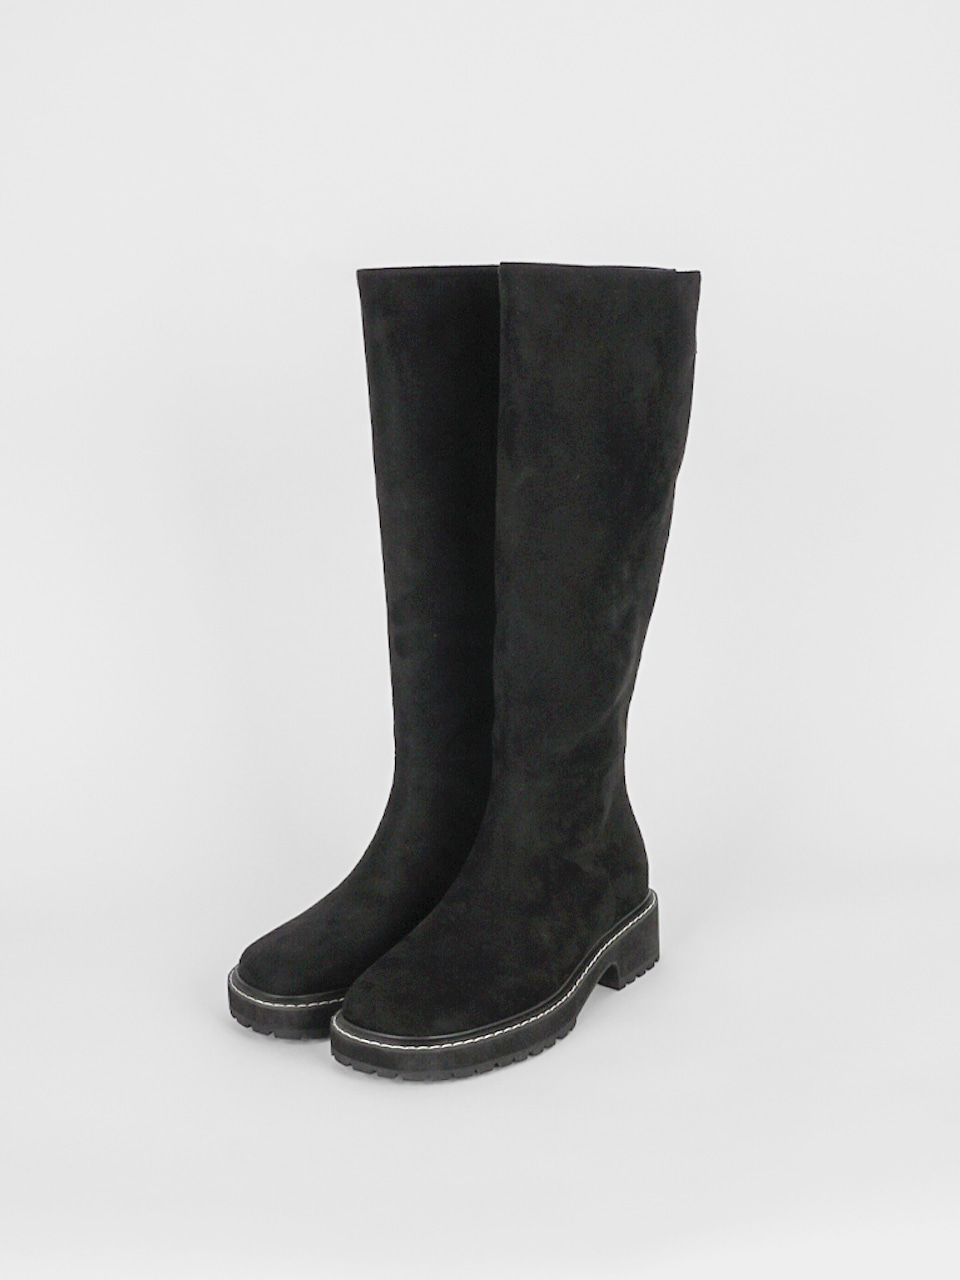 Stitch Long Boots (Suede Black)